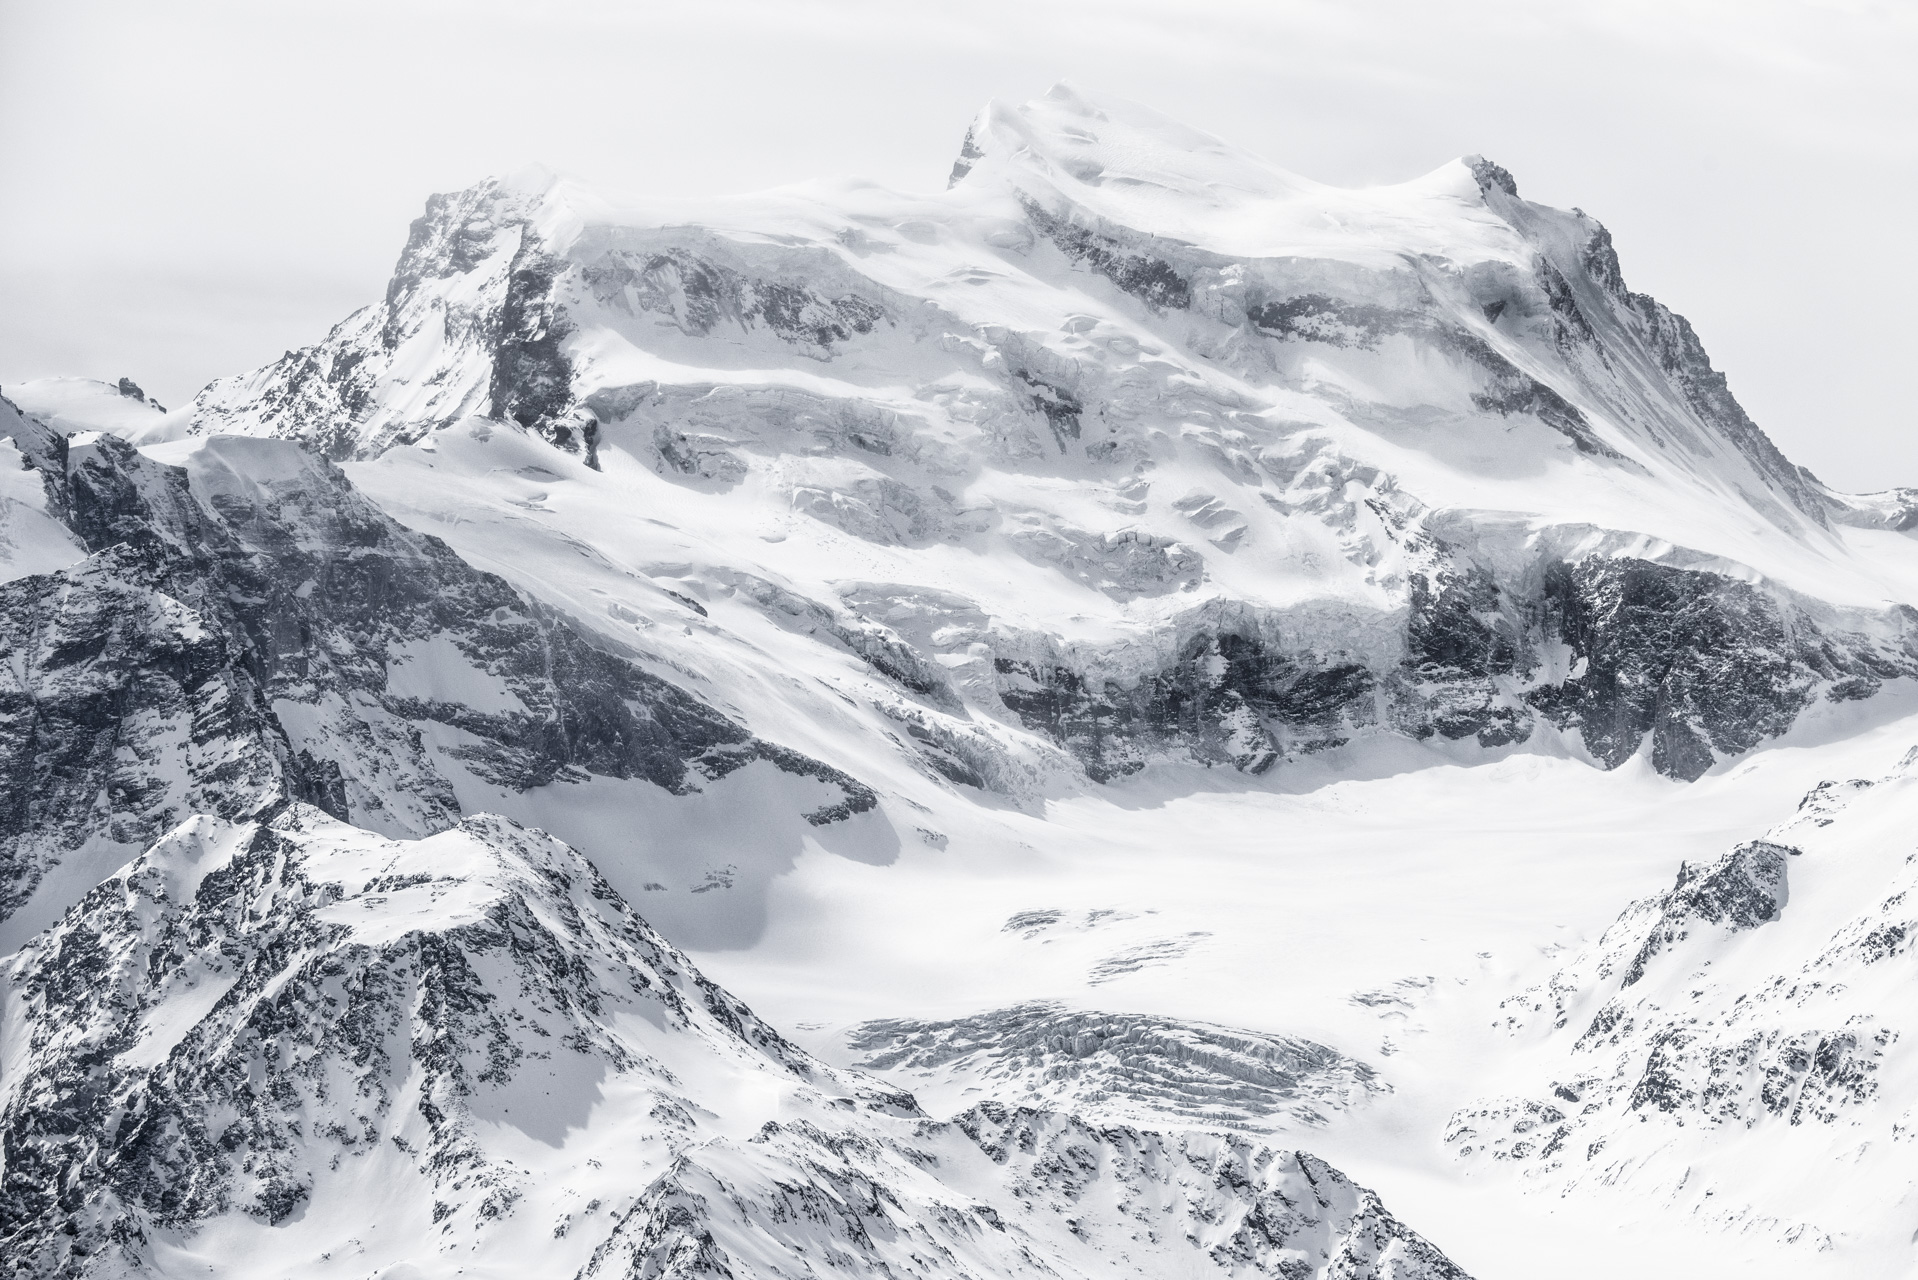 Grand Combin black and white photo - Crans Montana Switzerland - Valley of zermatt Engadine, top of the Valais Alps mountains 